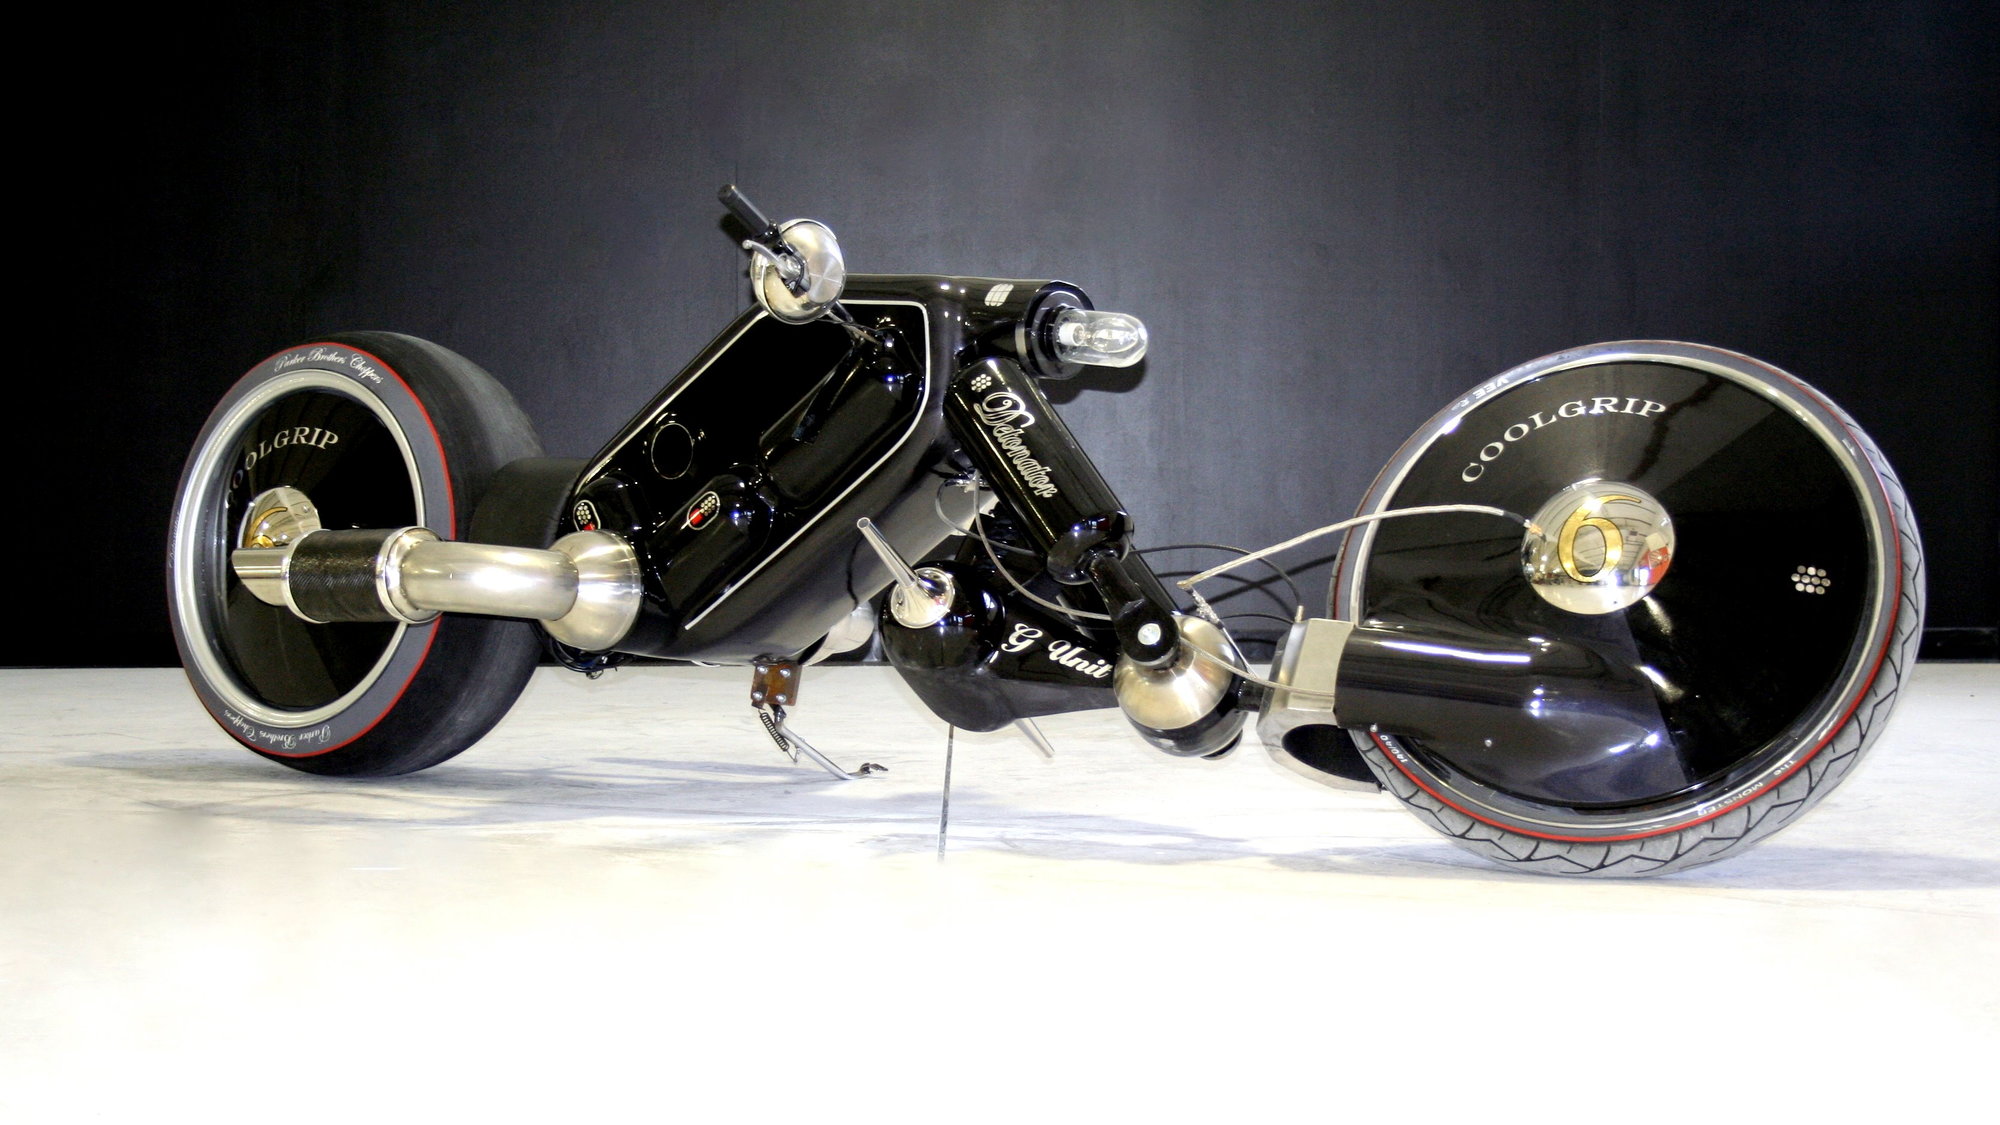 The Detonator - Electric chopper motorcycle